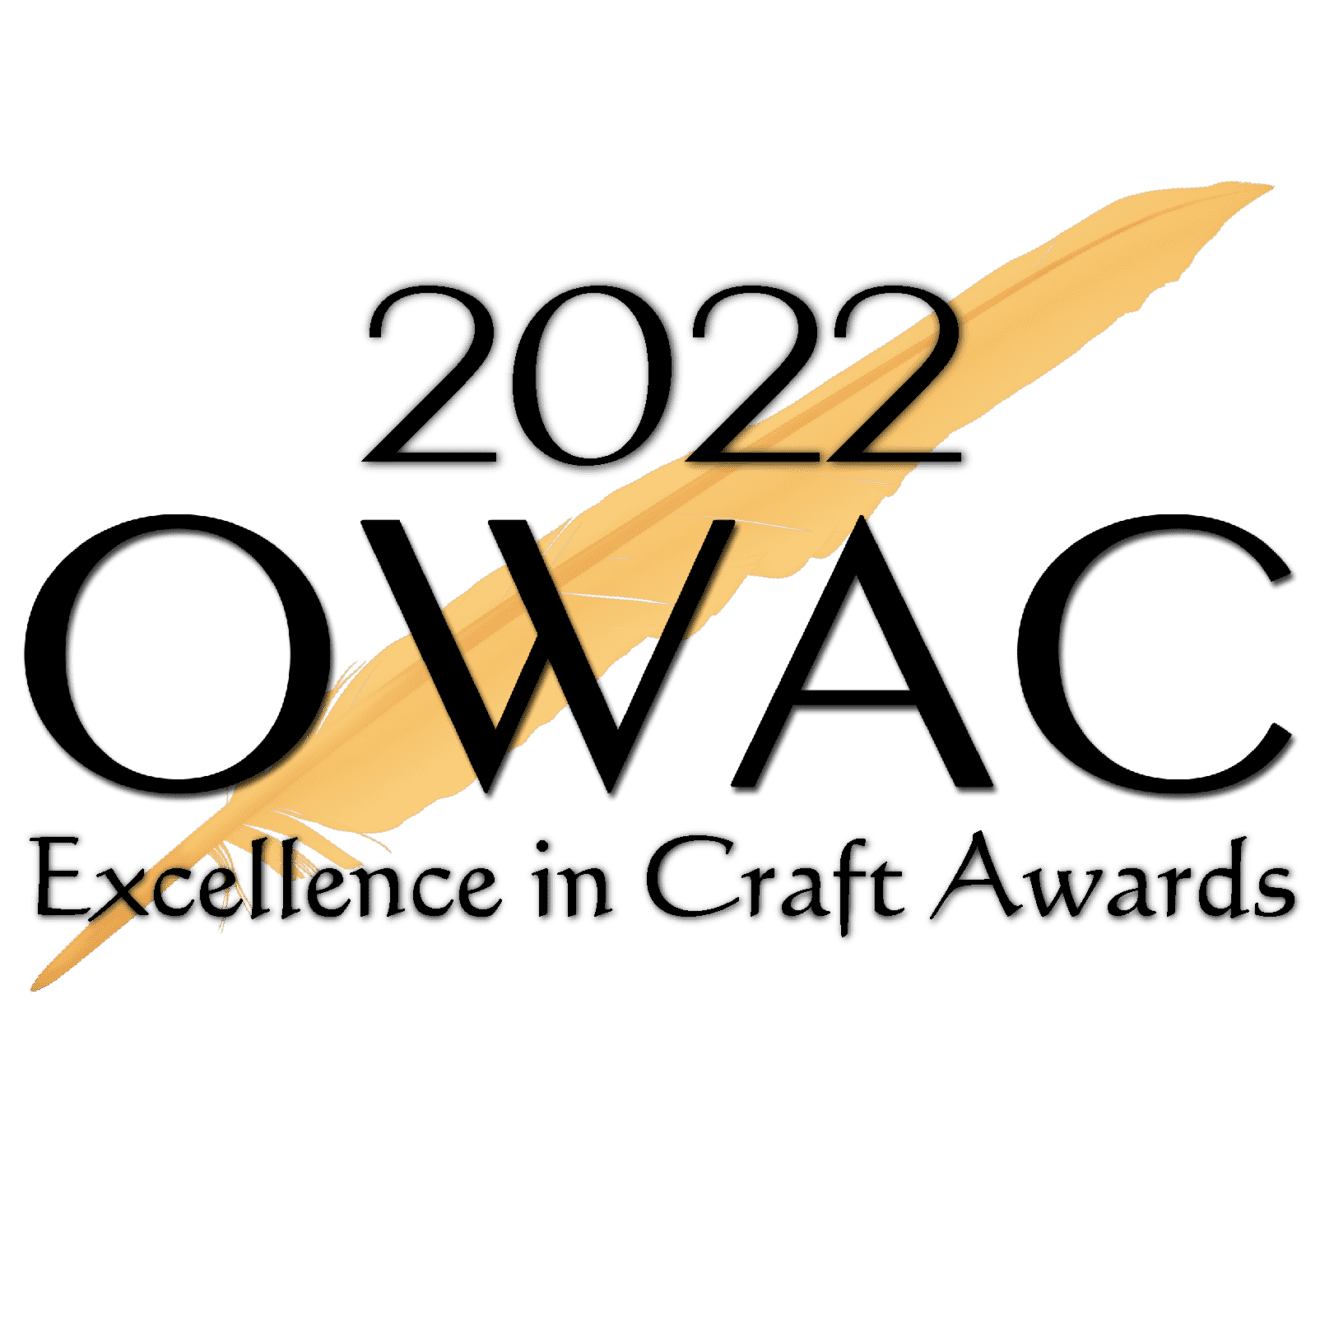 OWAC EIC 2022 square logo